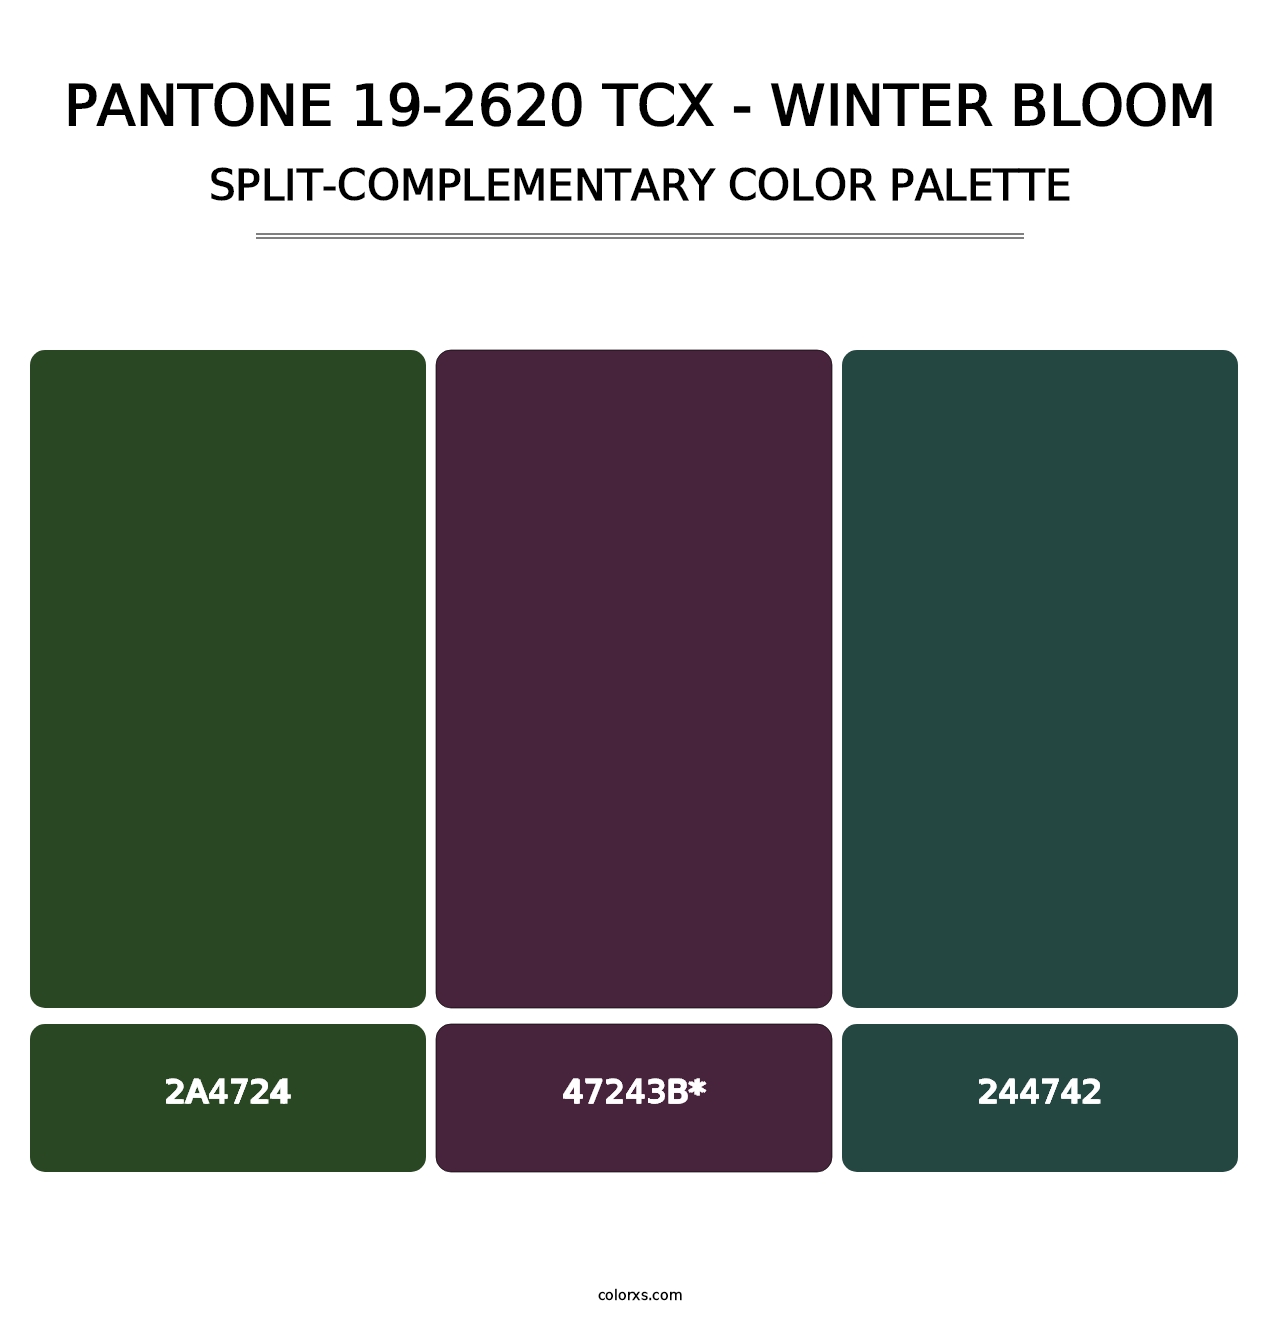 PANTONE 19-2620 TCX - Winter Bloom - Split-Complementary Color Palette